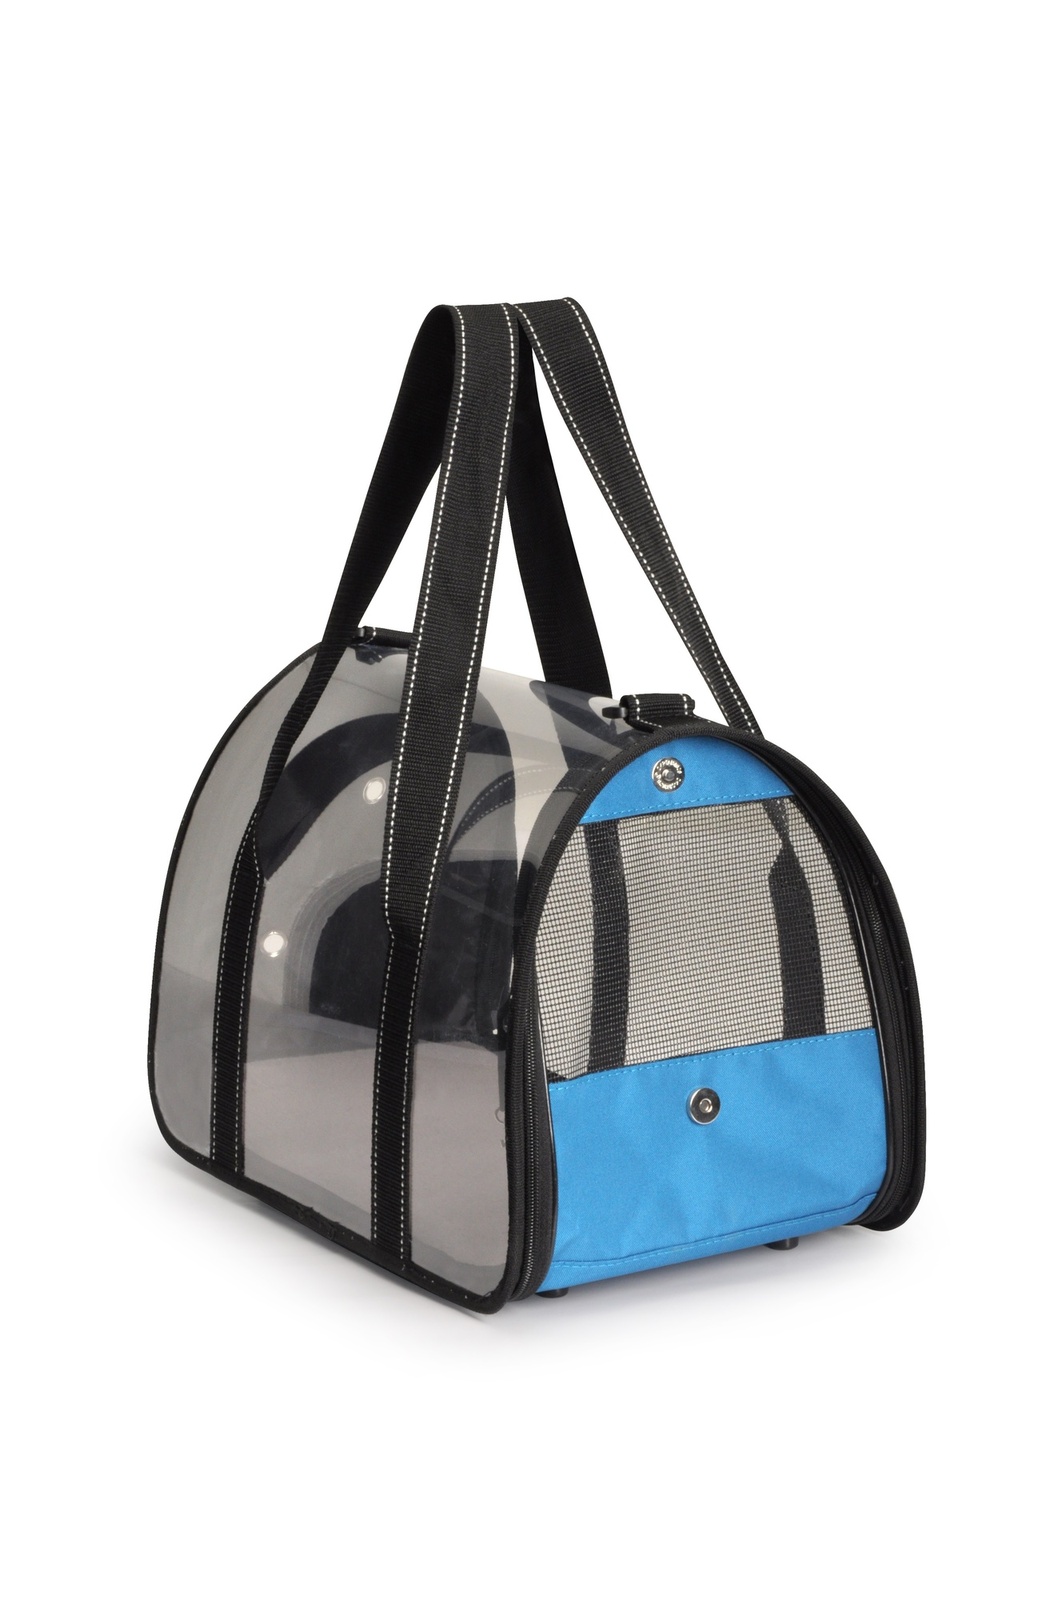 Camon Camon сумка-переноска прозрачная, 42x25x25 см, голубая (670 г) camon camon рюкзак переноска pet голубая 27x24x42 см 812 г